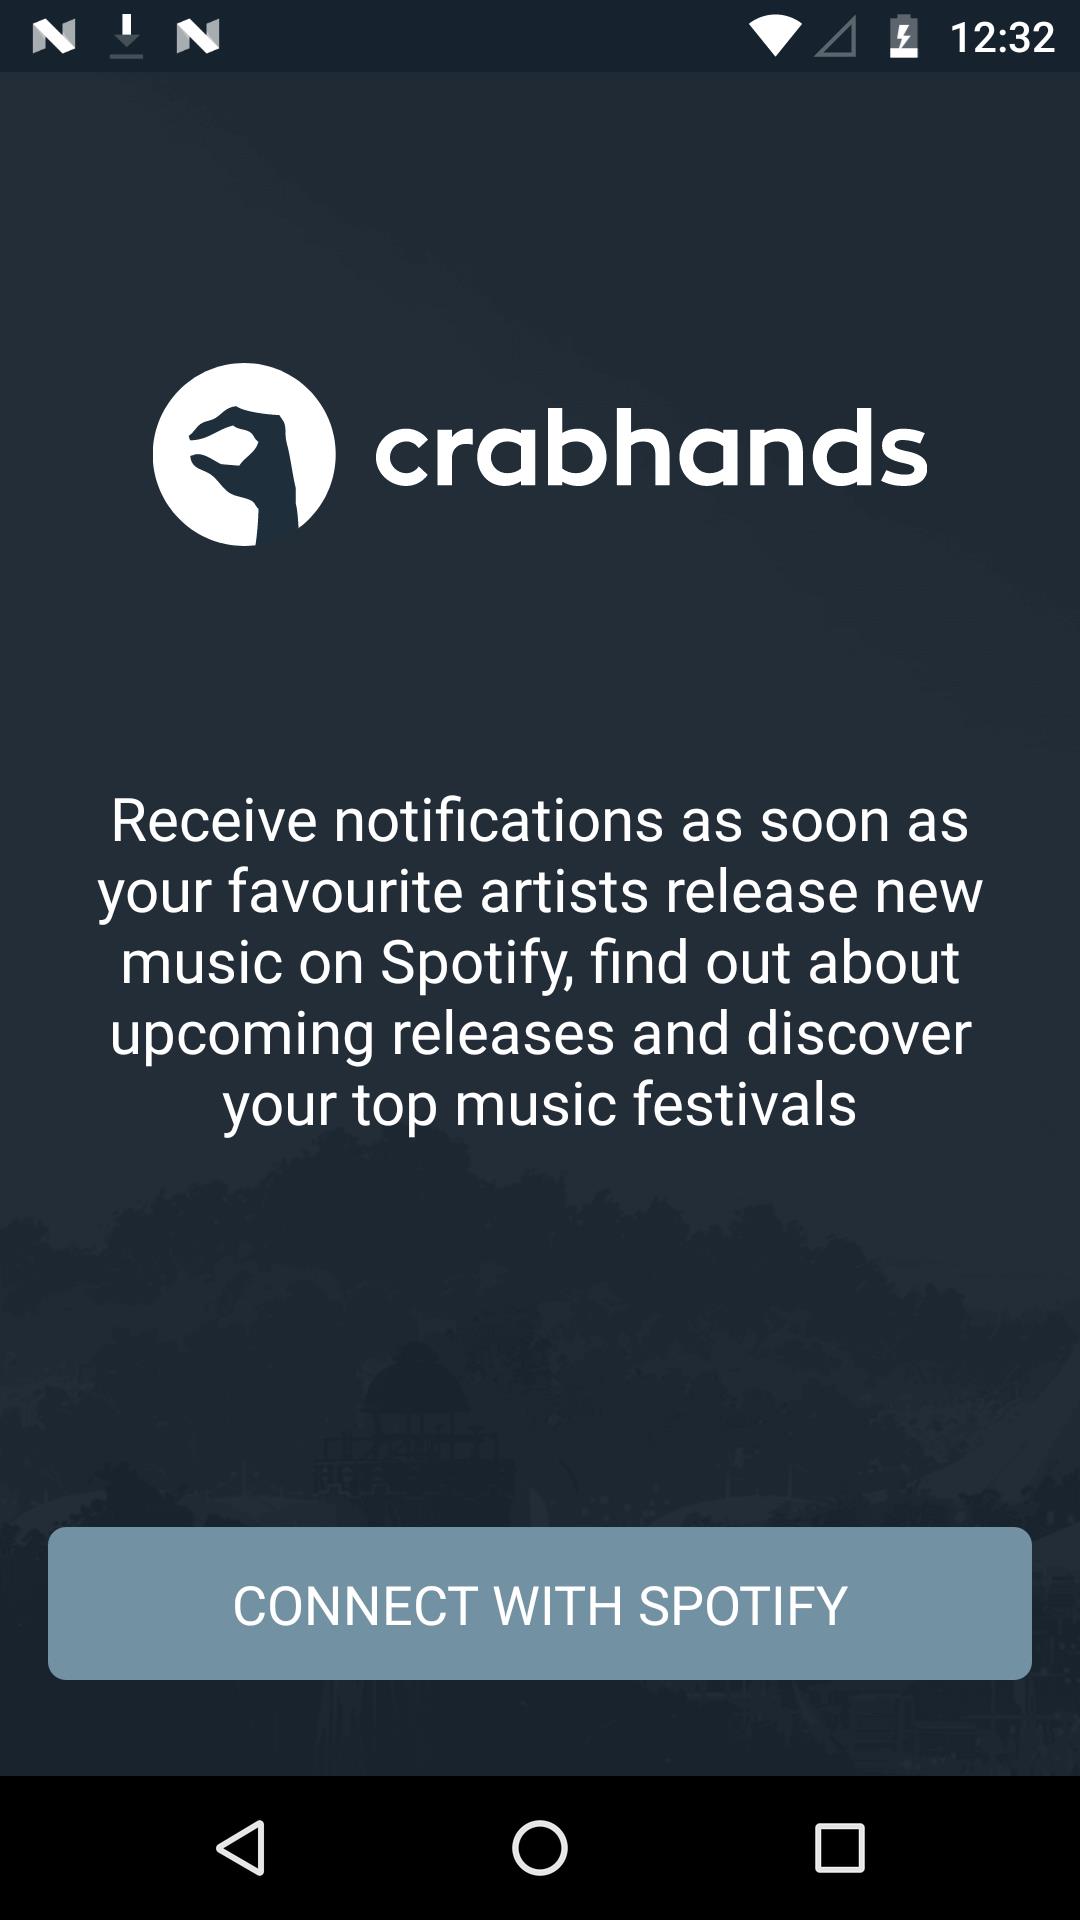 crabhands: new music releases Screenshot 1